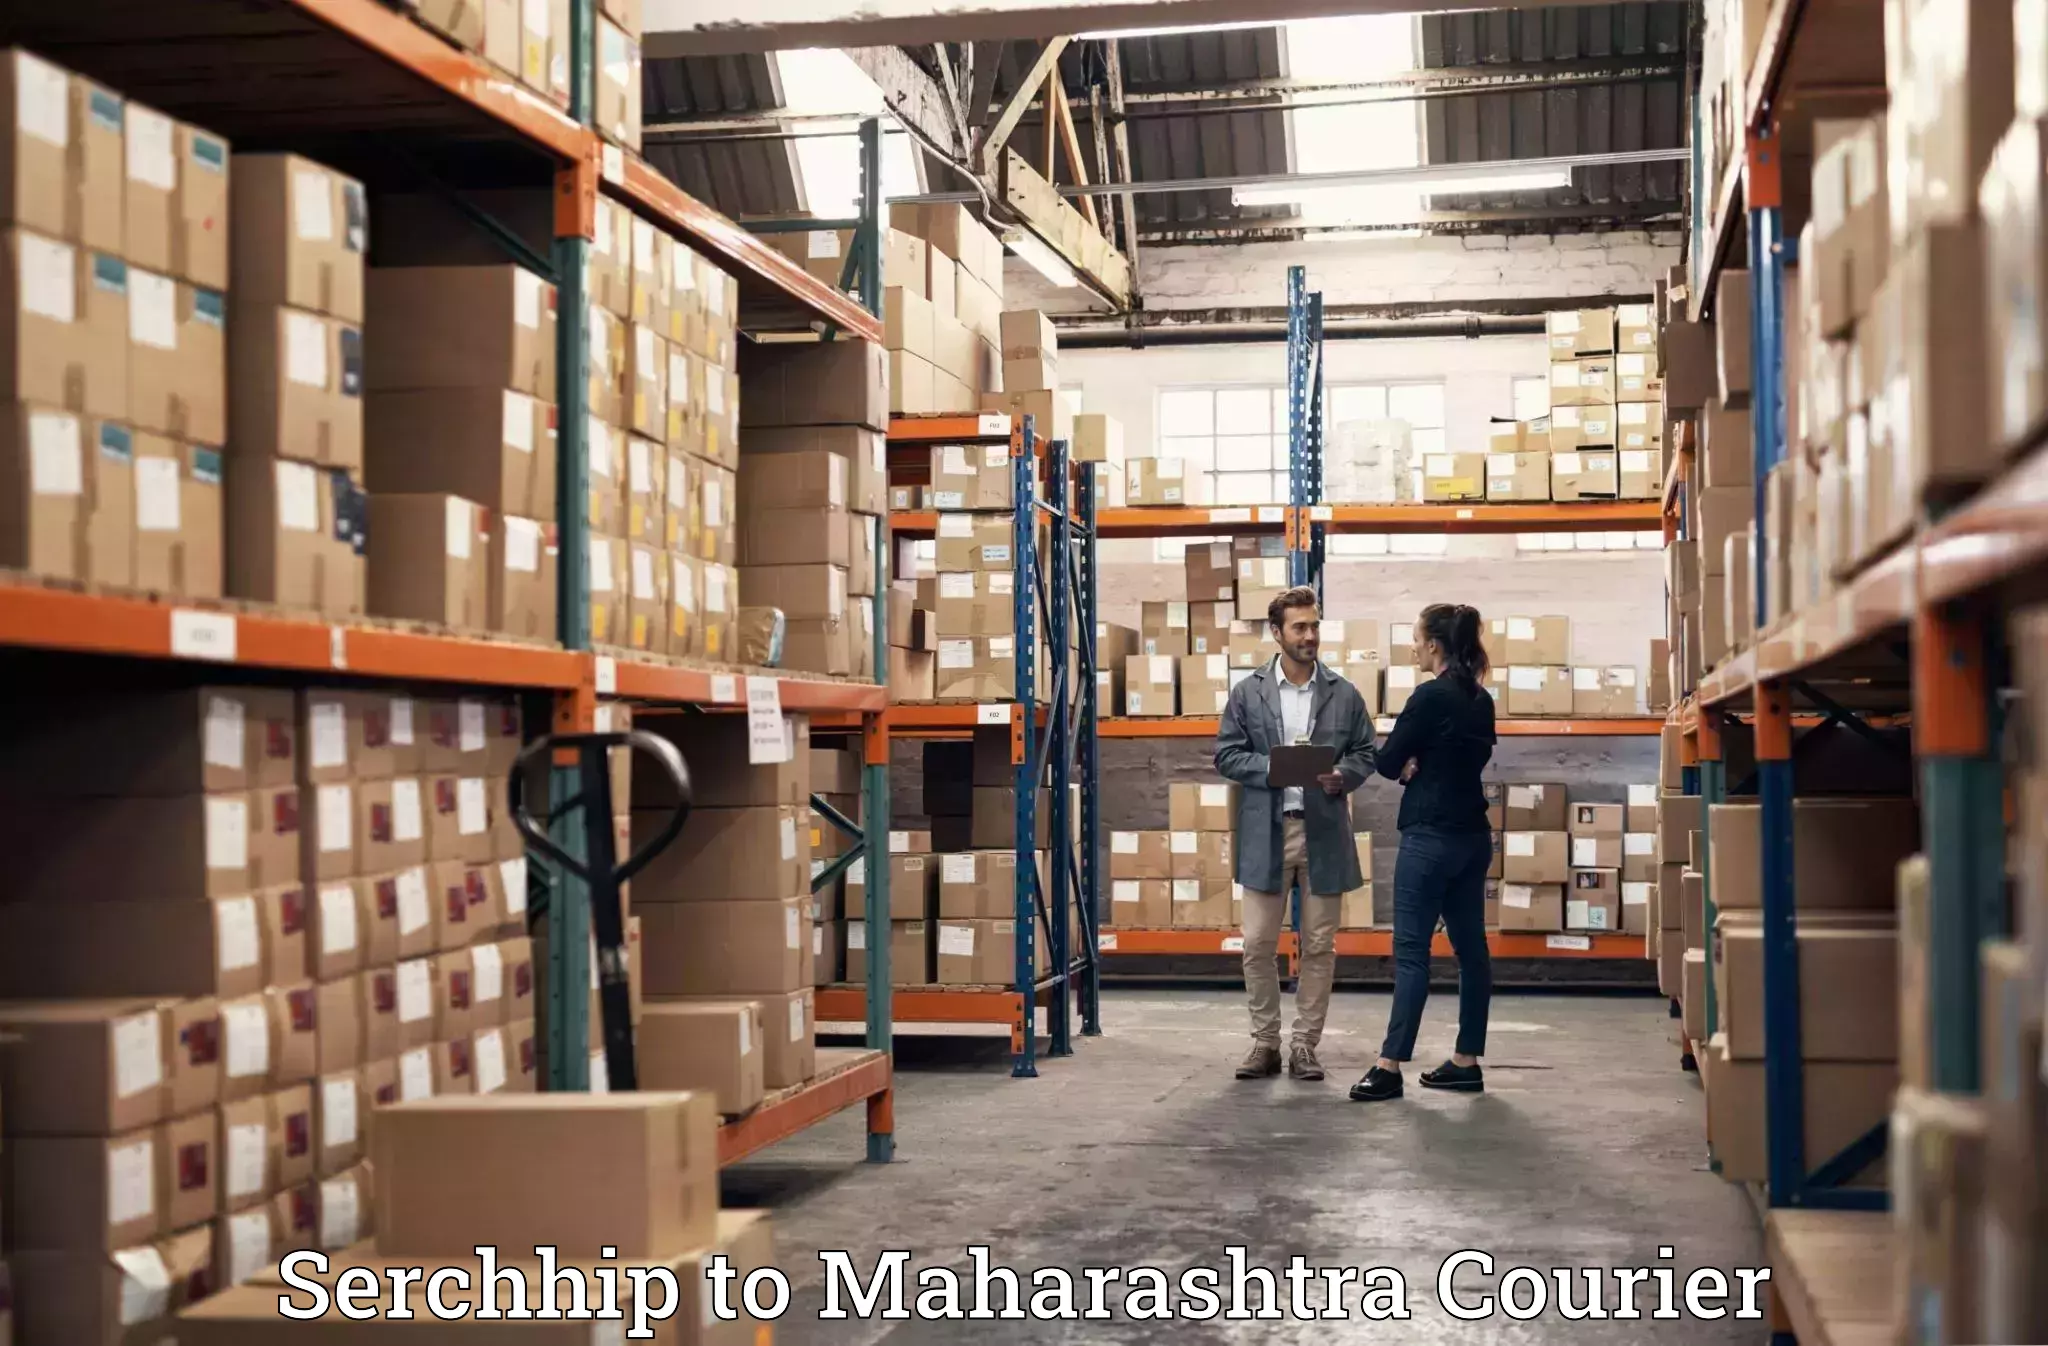 Professional moving company Serchhip to Ballarpur